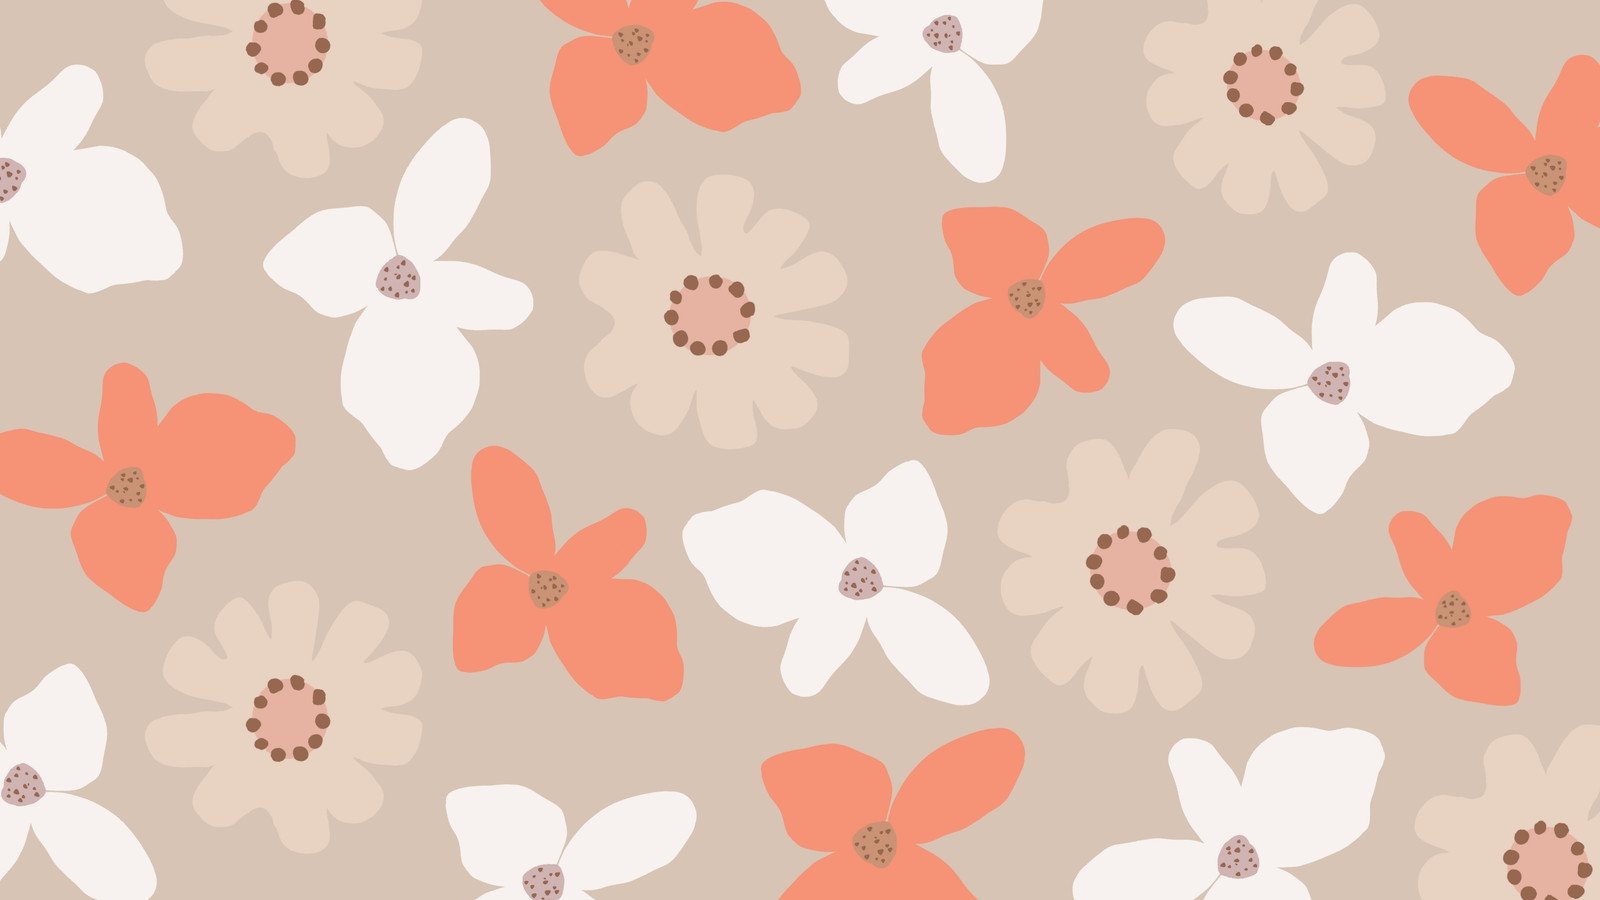 https://marketplace.canva.com/EAFgxIlL8ZU/1/0/1600w/canva-beige-white-orange-modern-floral-spring-flower-desktop-wallpaper-a2amAp-52Qs.jpg